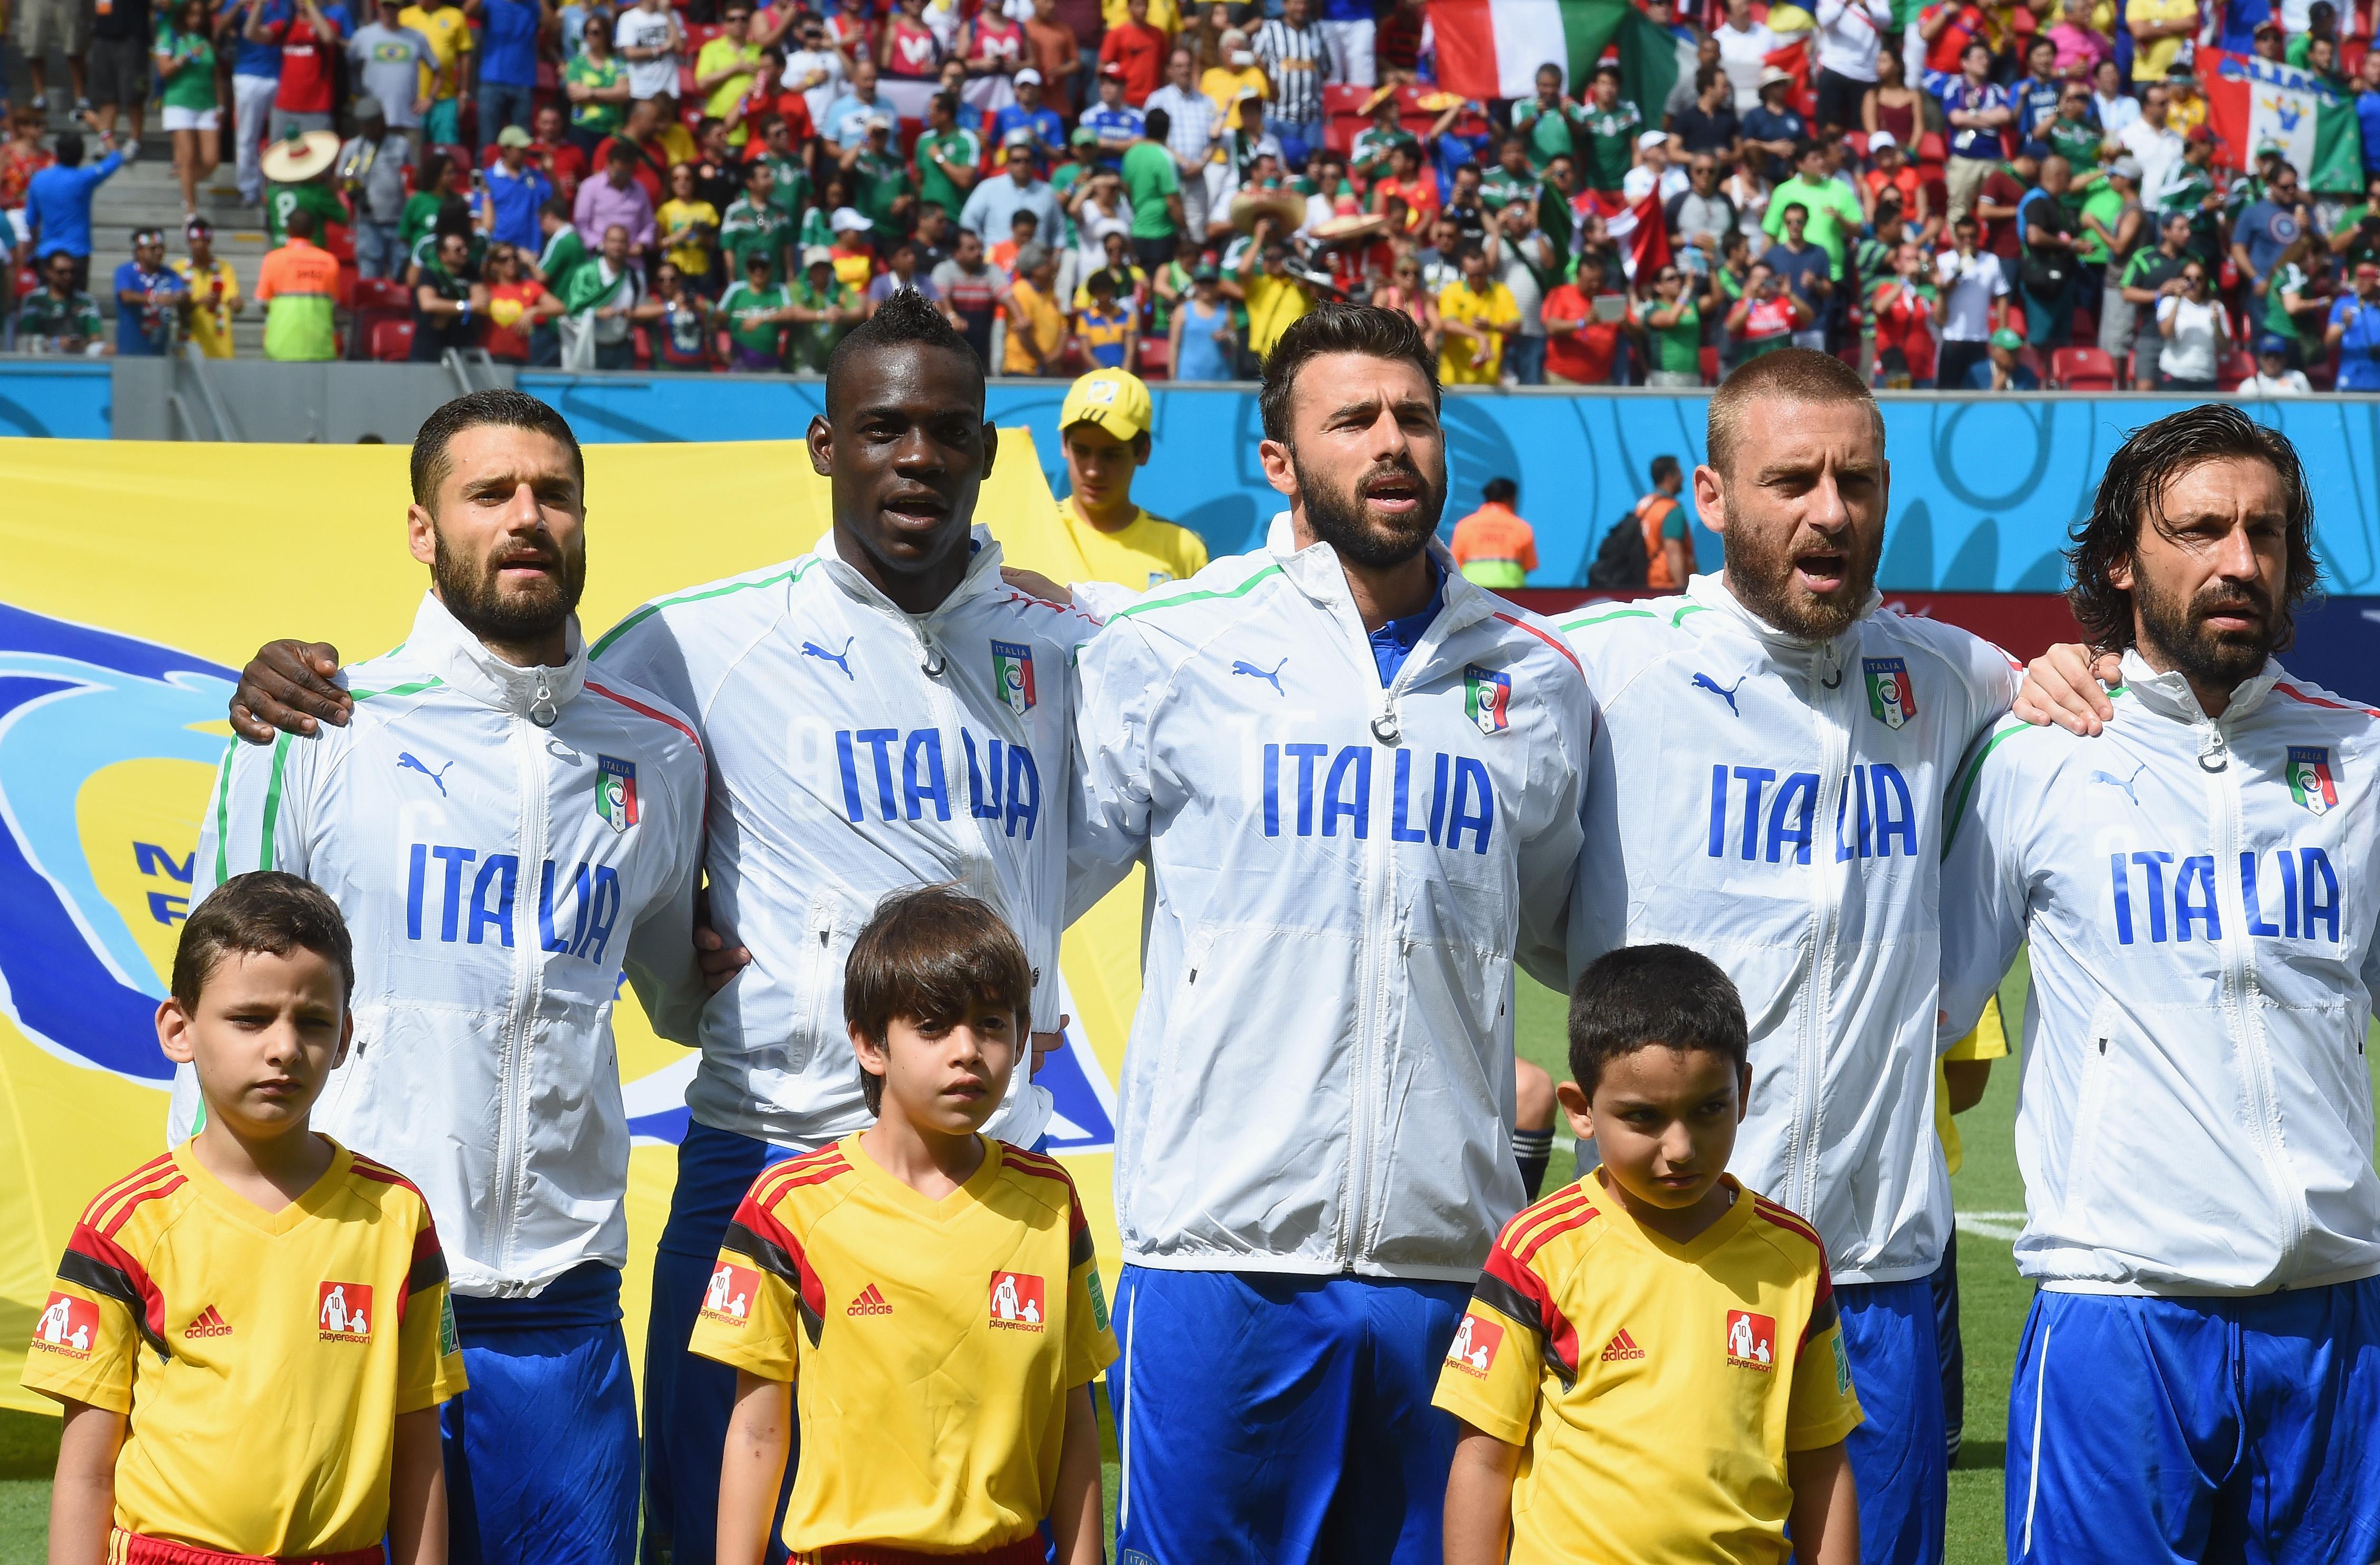 Italian national team